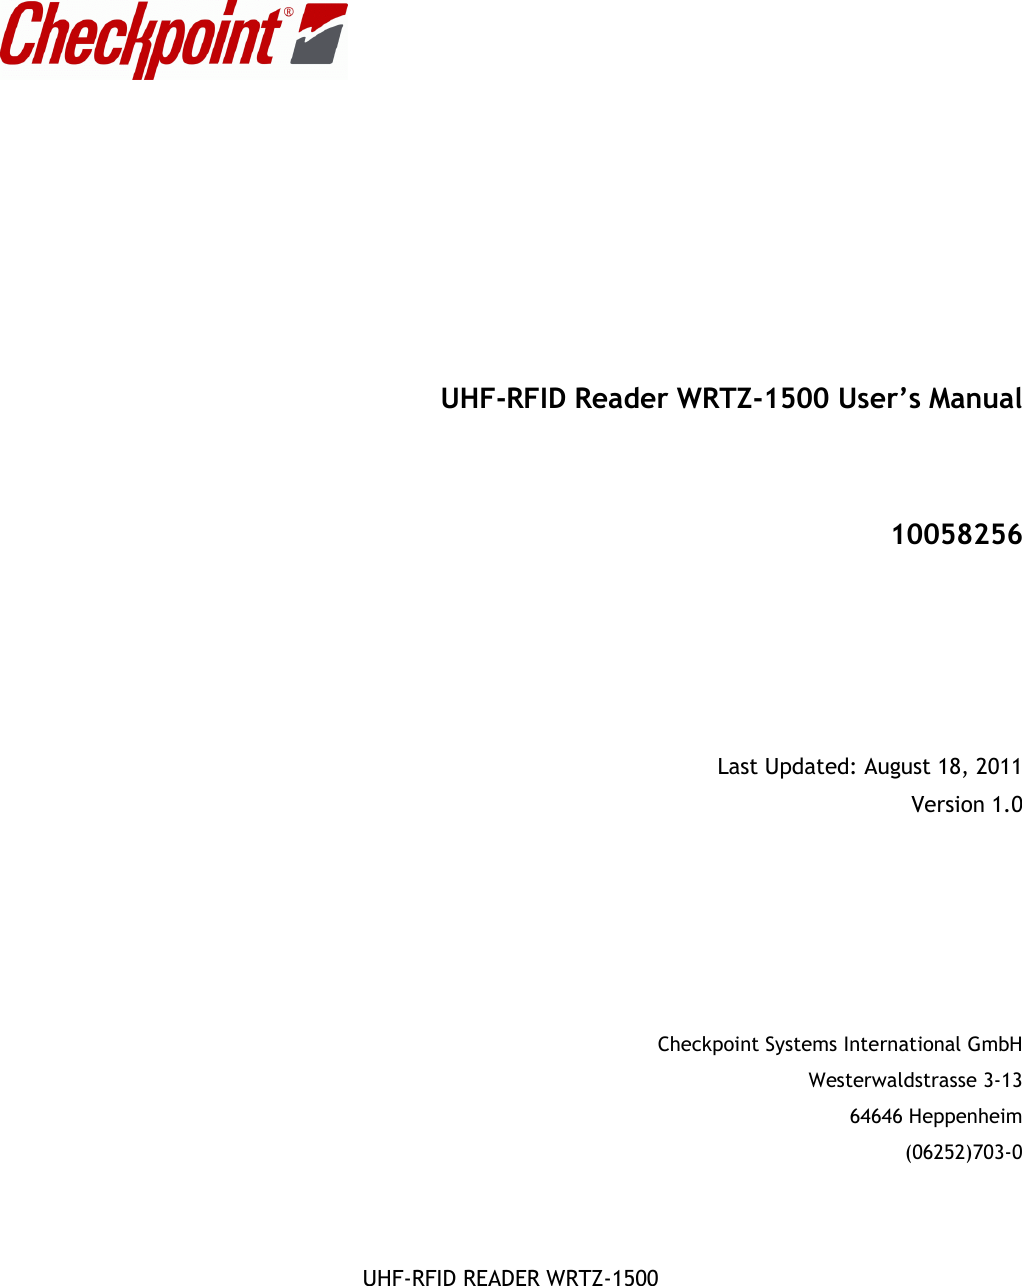    UHF-RFID READER WRTZ-1500                           UHF-RFID Reader WRTZ-1500 User’s Manual    10058256      Last Updated: August 18, 2011 Version 1.0        Checkpoint Systems International GmbH Westerwaldstrasse 3-13 64646 Heppenheim (06252)703-0 